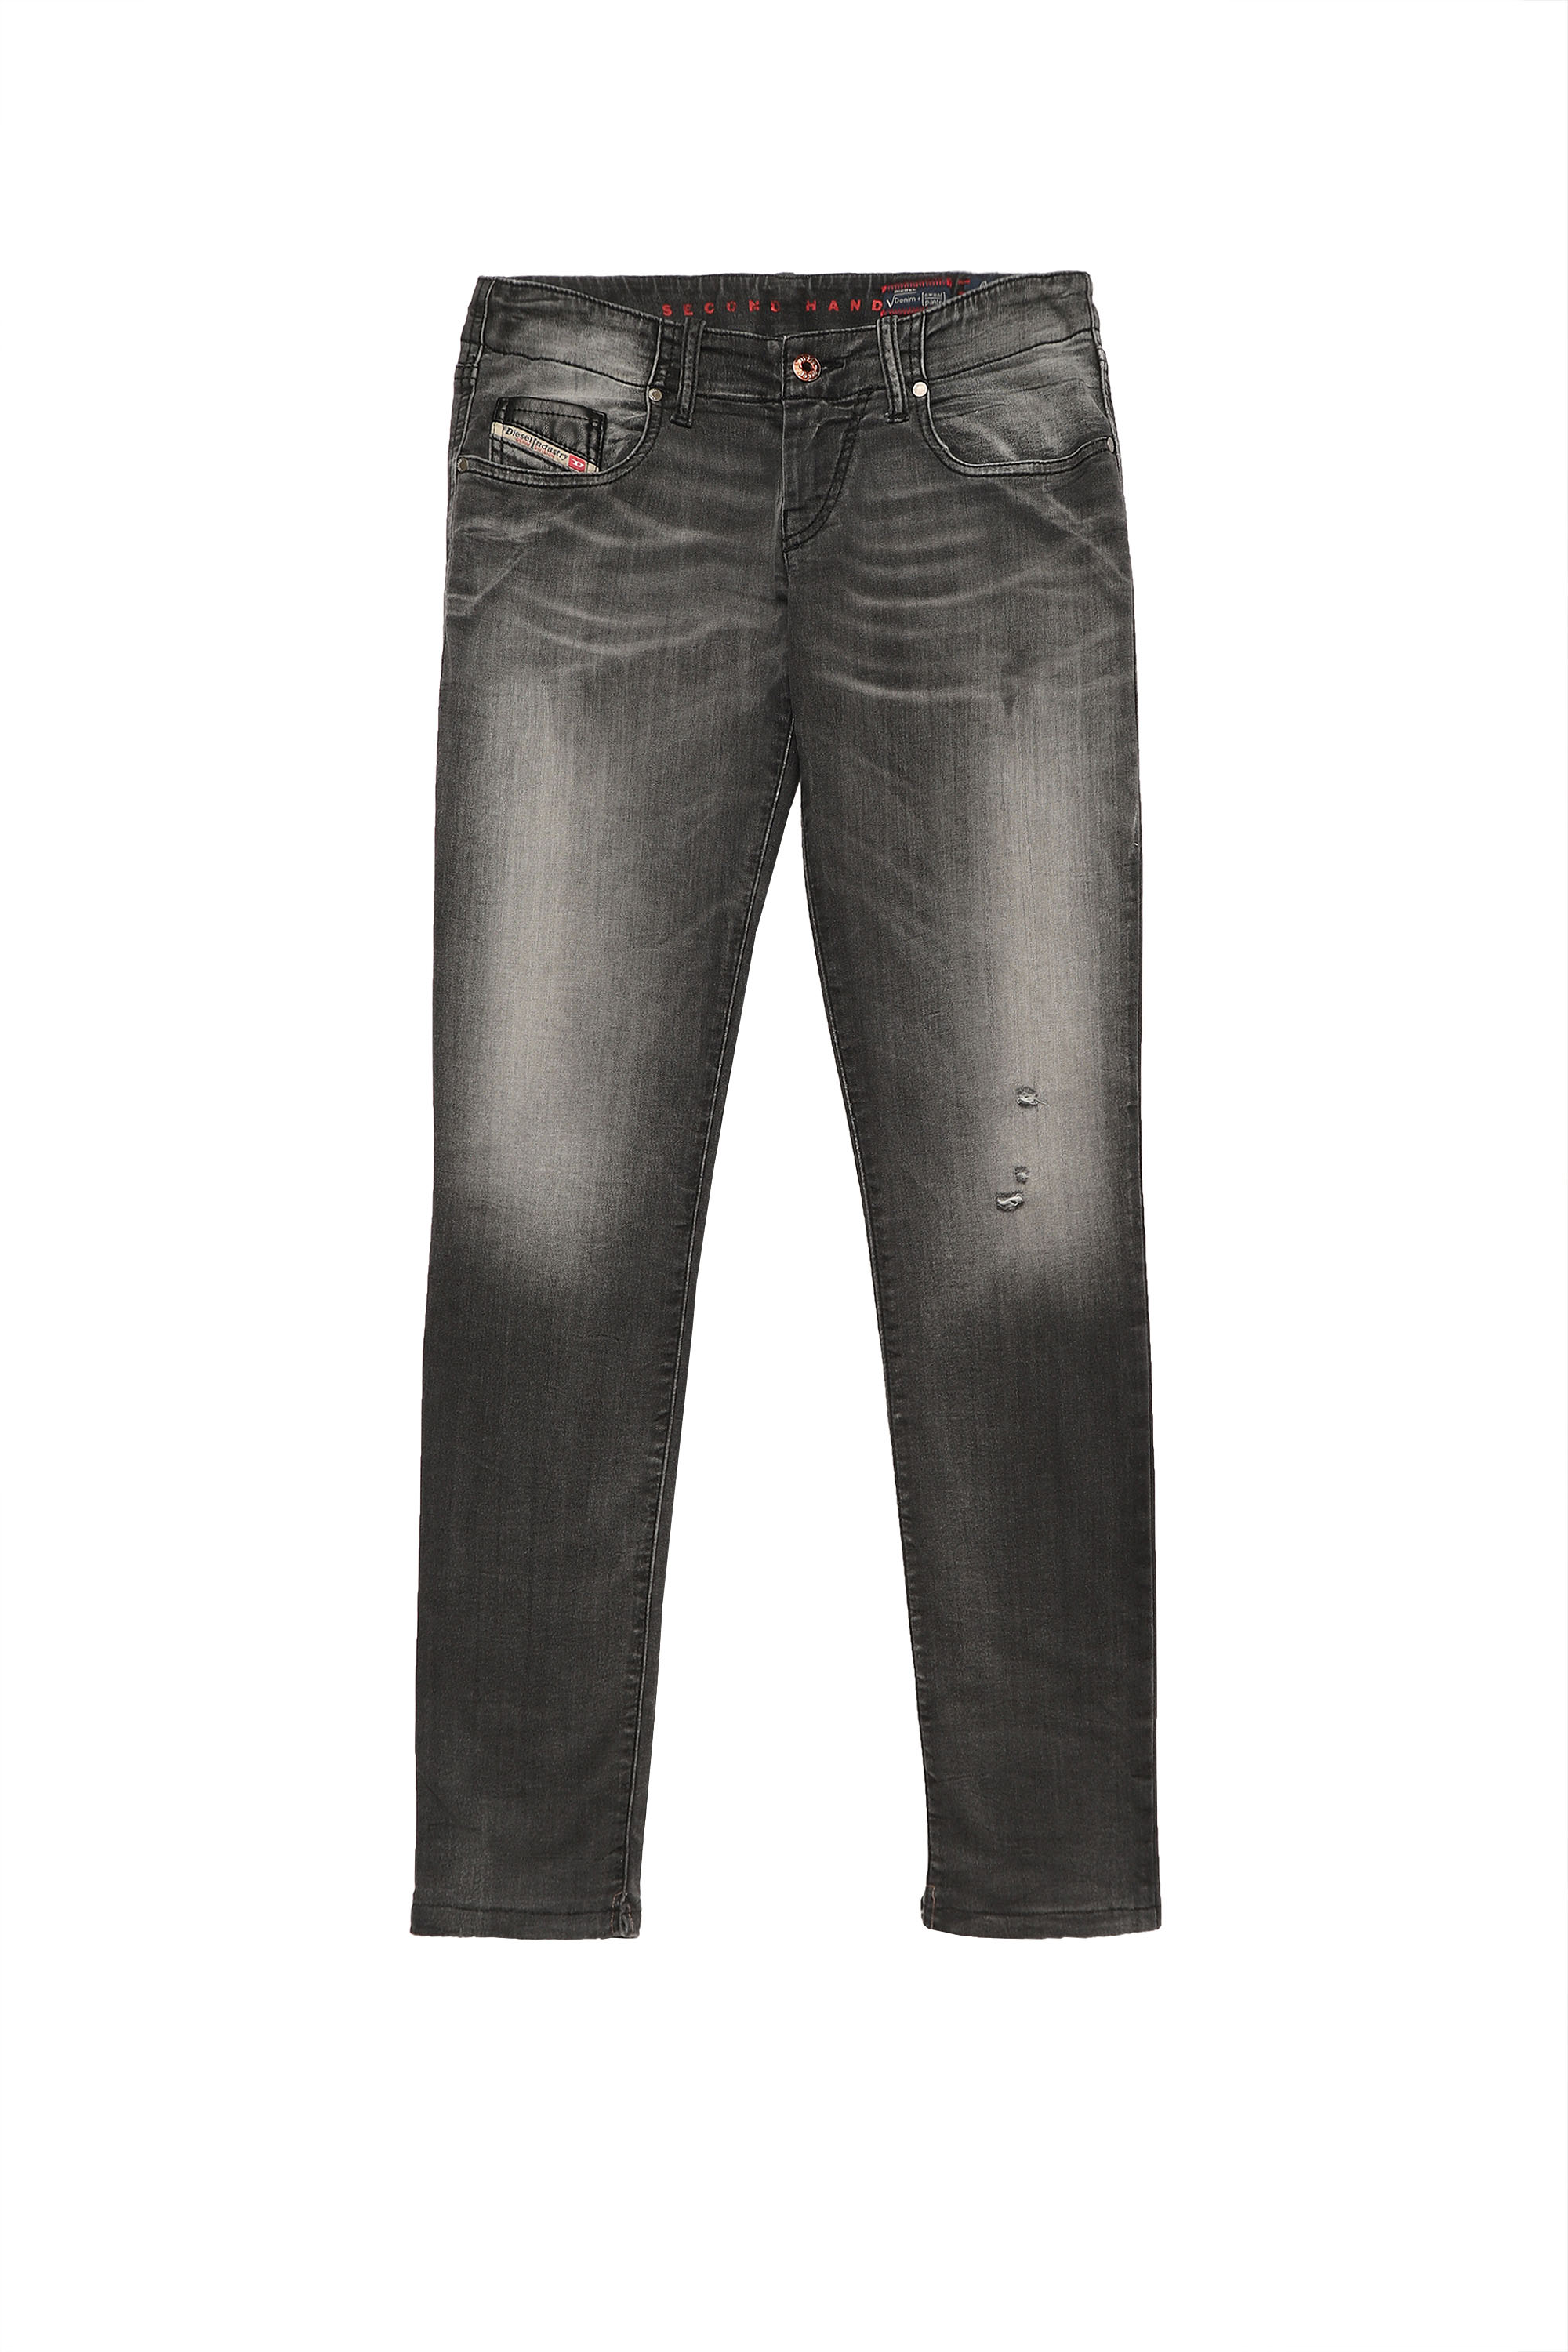 GRUPEE JoggJeans®, Black/Dark grey - Jeans